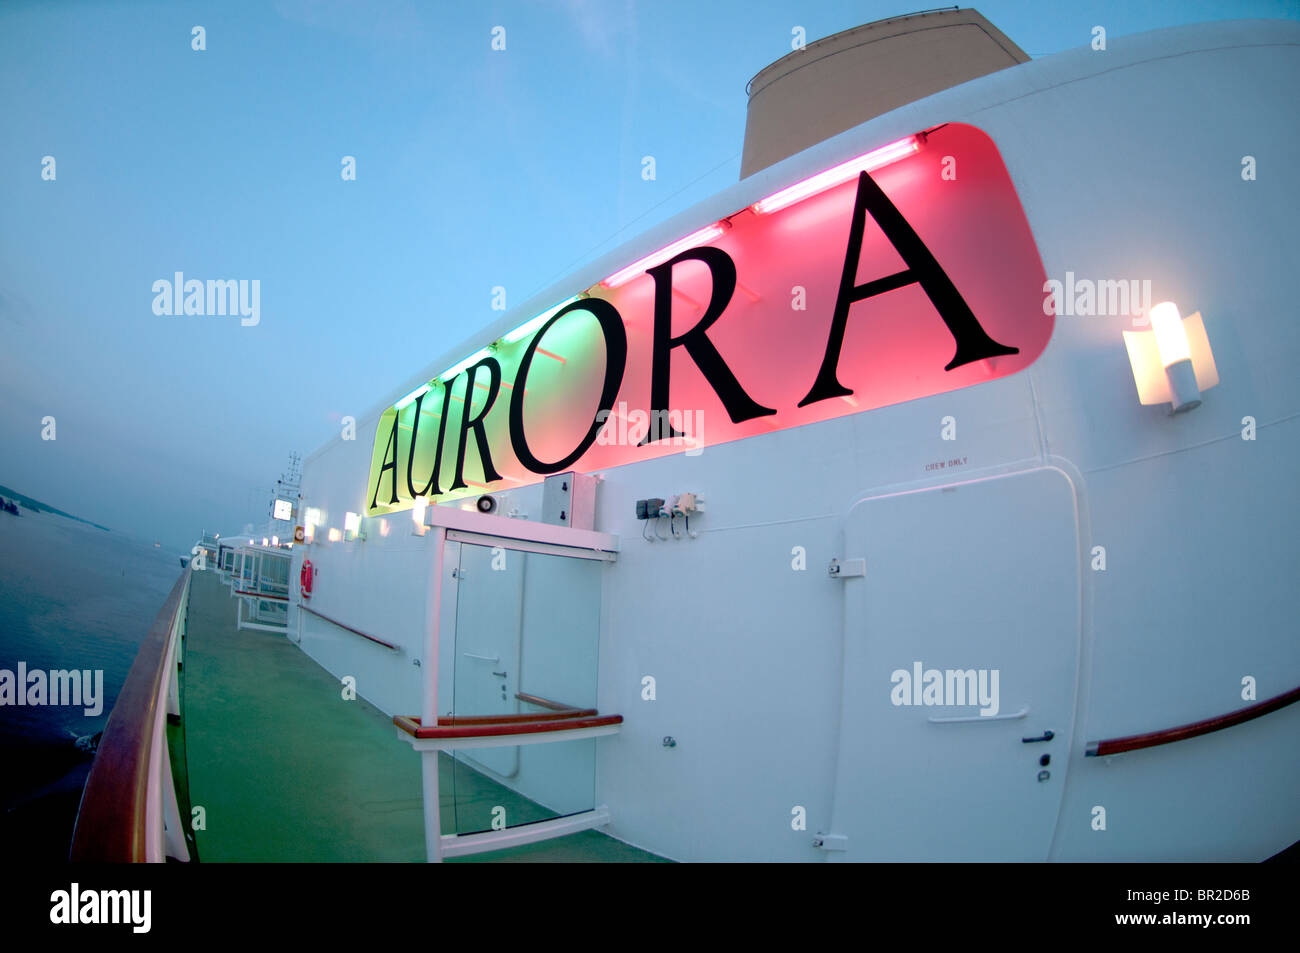 https://c8.alamy.com/comp/BR2D6B/a-fisheye-photograph-of-the-metal-sign-displaying-the-word-aurora-BR2D6B.jpg